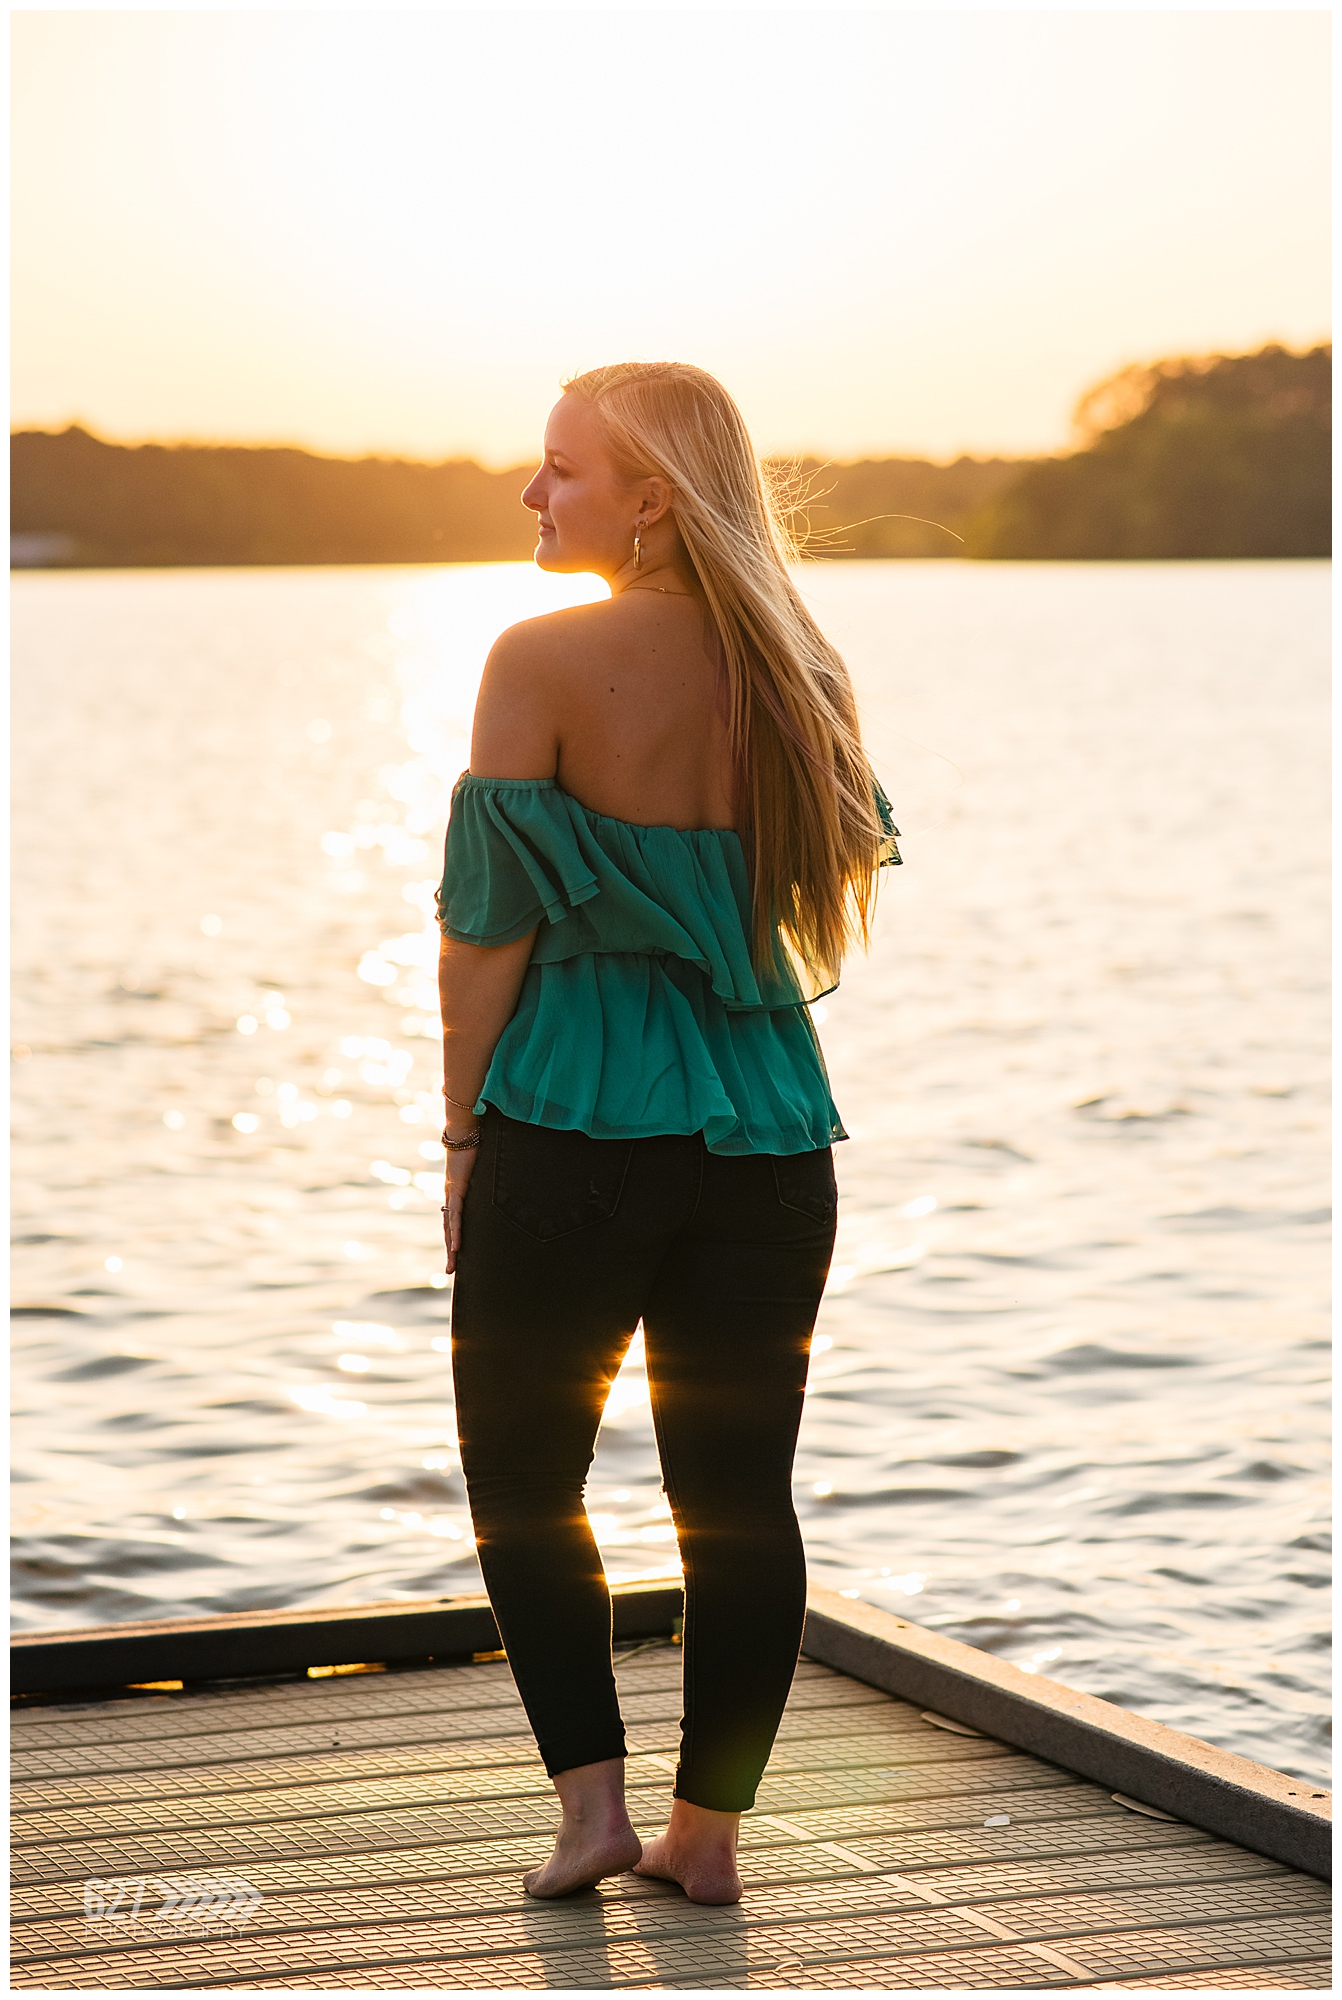 senior girl by the lake